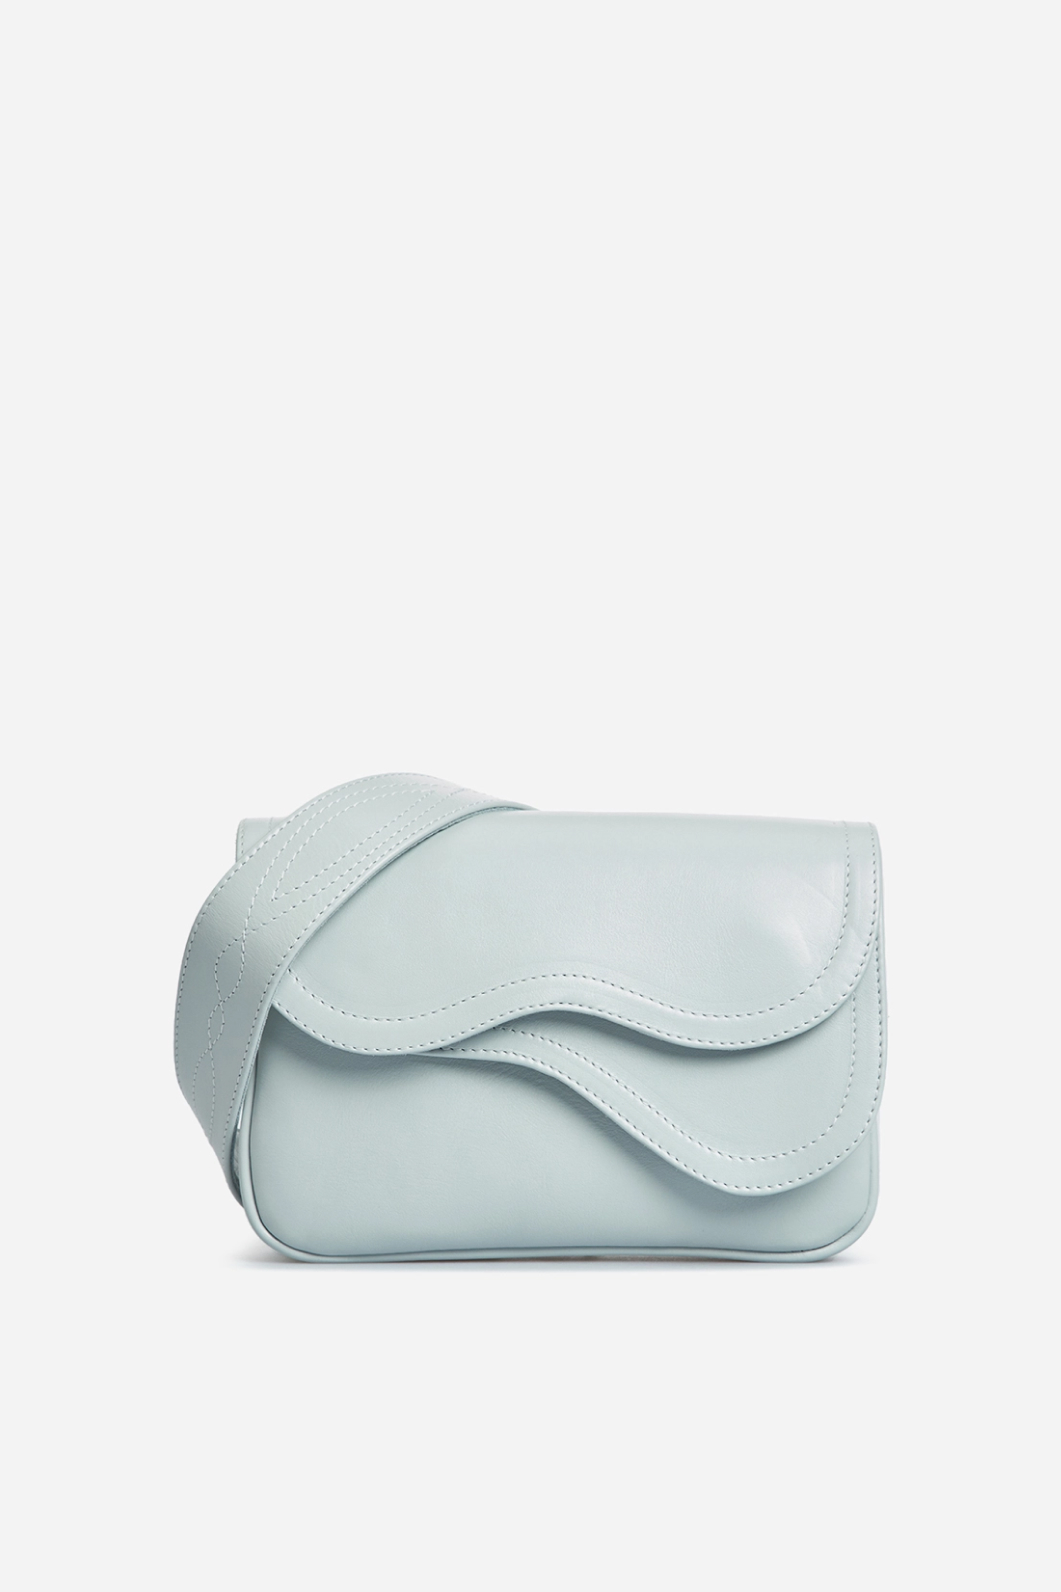 Saddle bag mini blue-gray leather crossbody bag /silver/ 